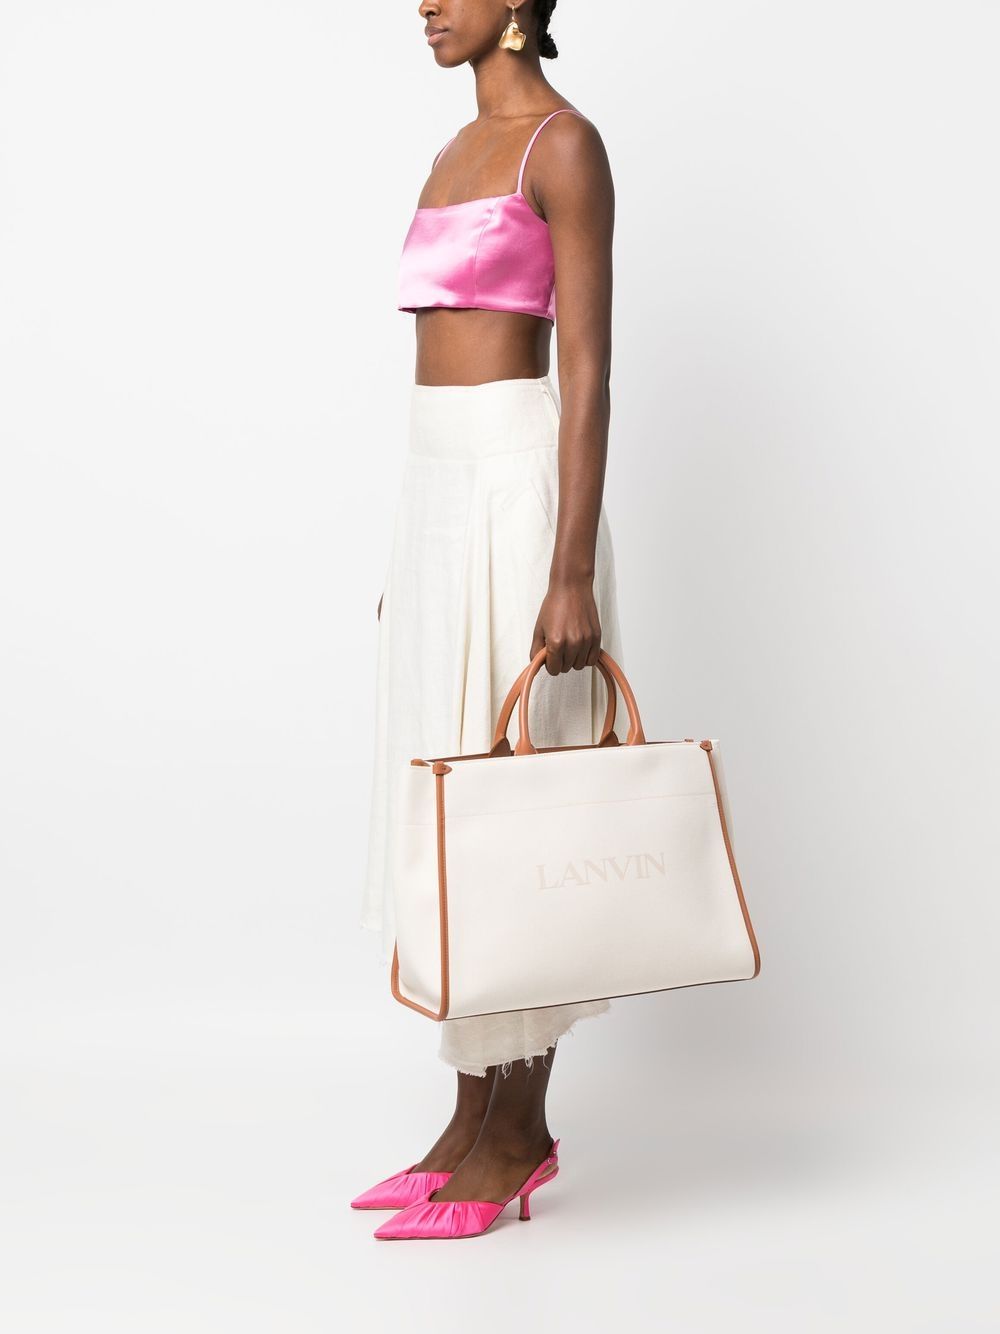 Lanvin LANVIN- Cotton Shopping Bag